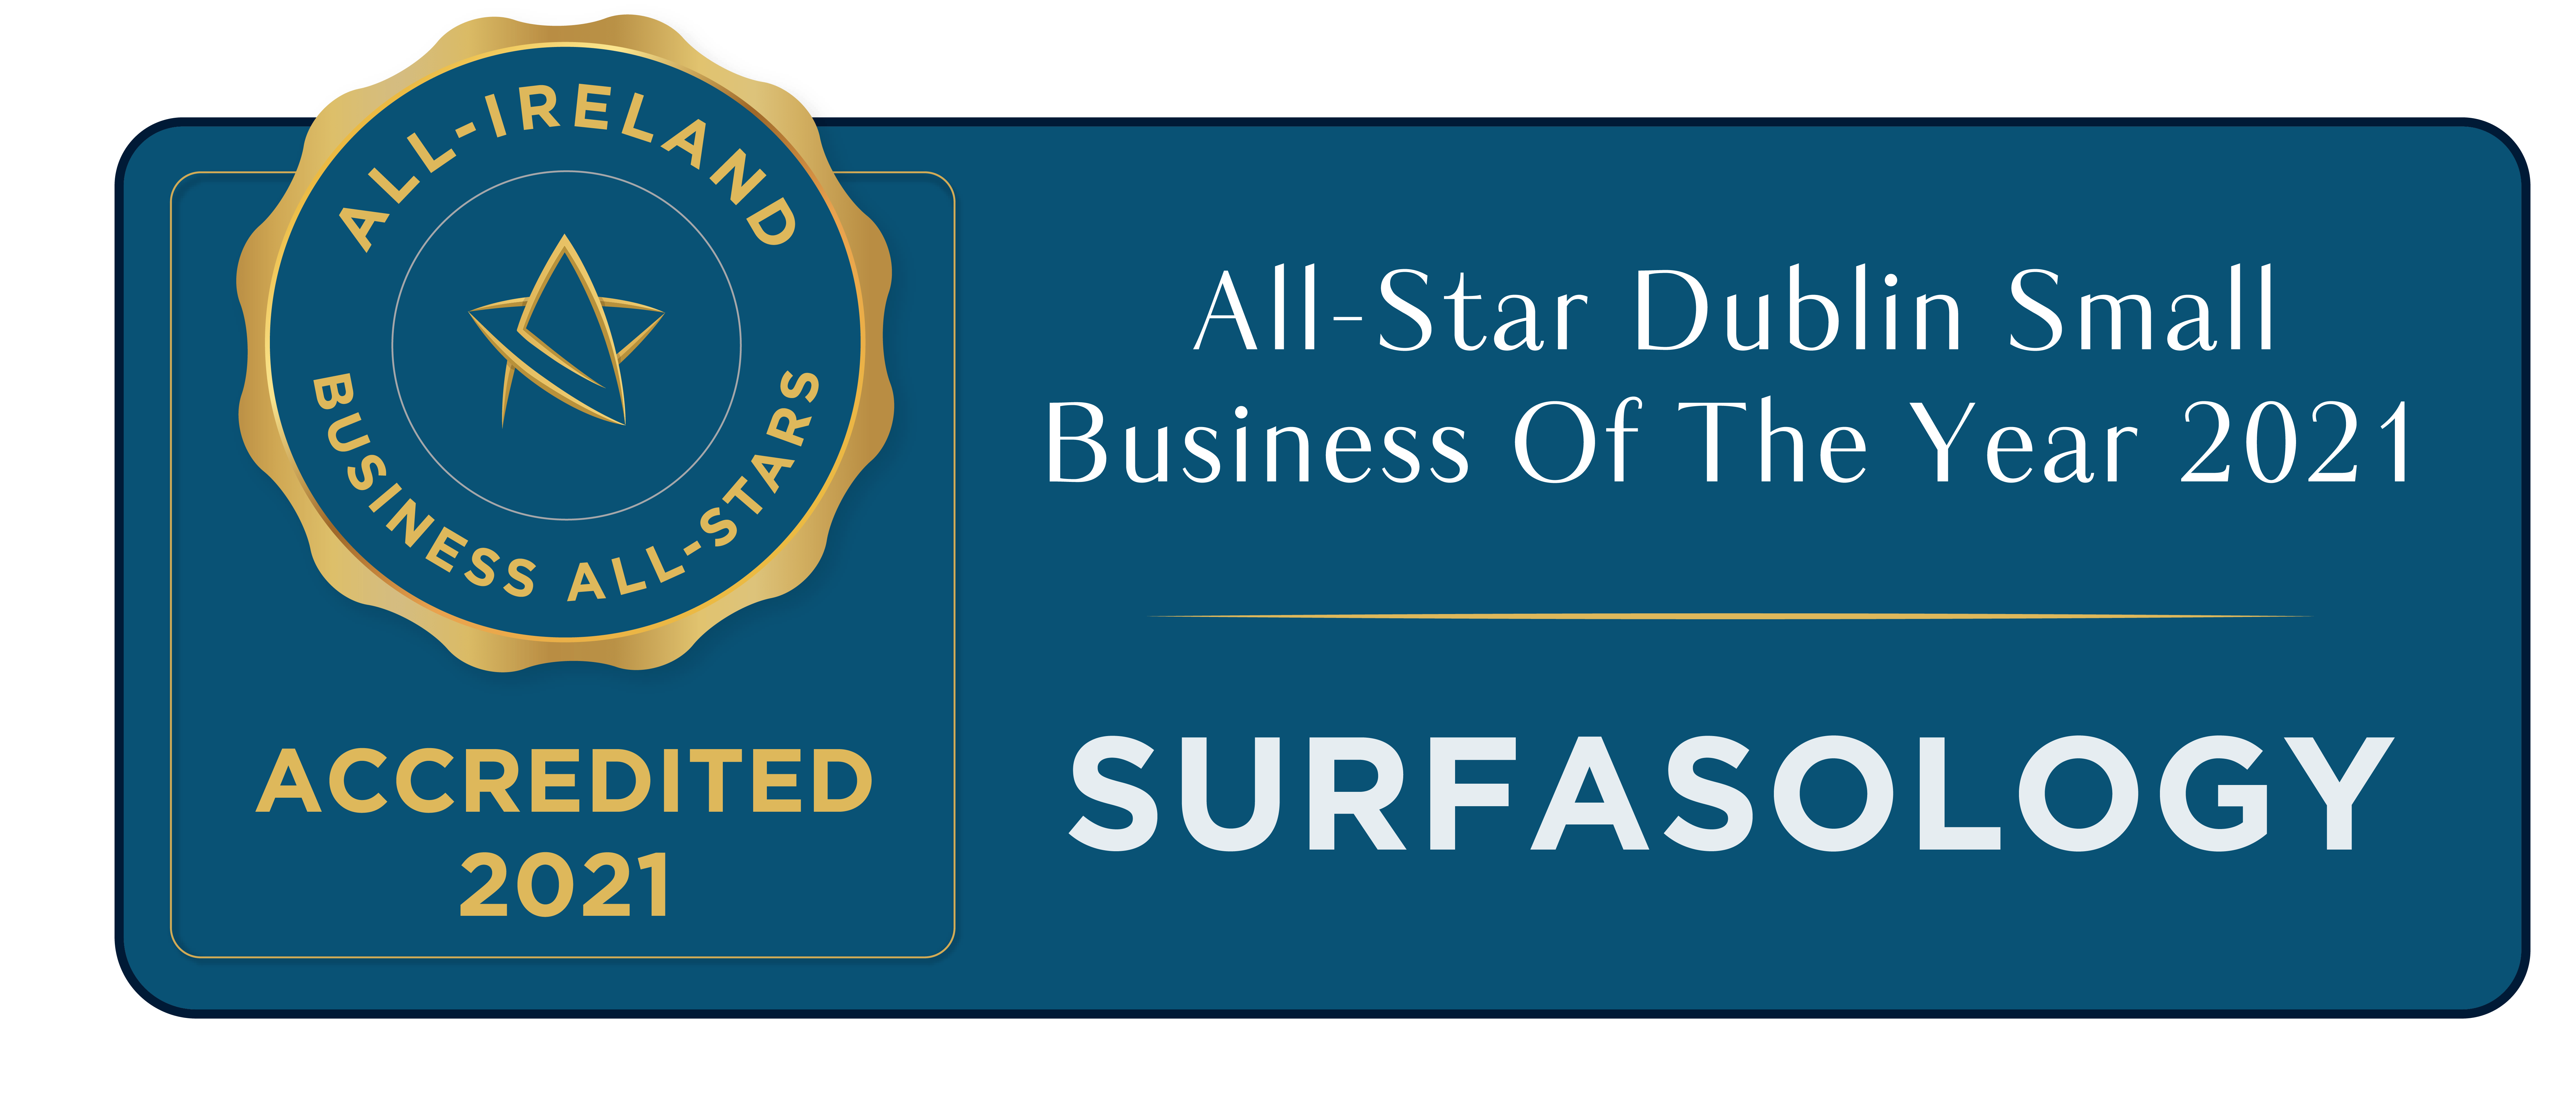 SURFASOLOGY Business All-Stars